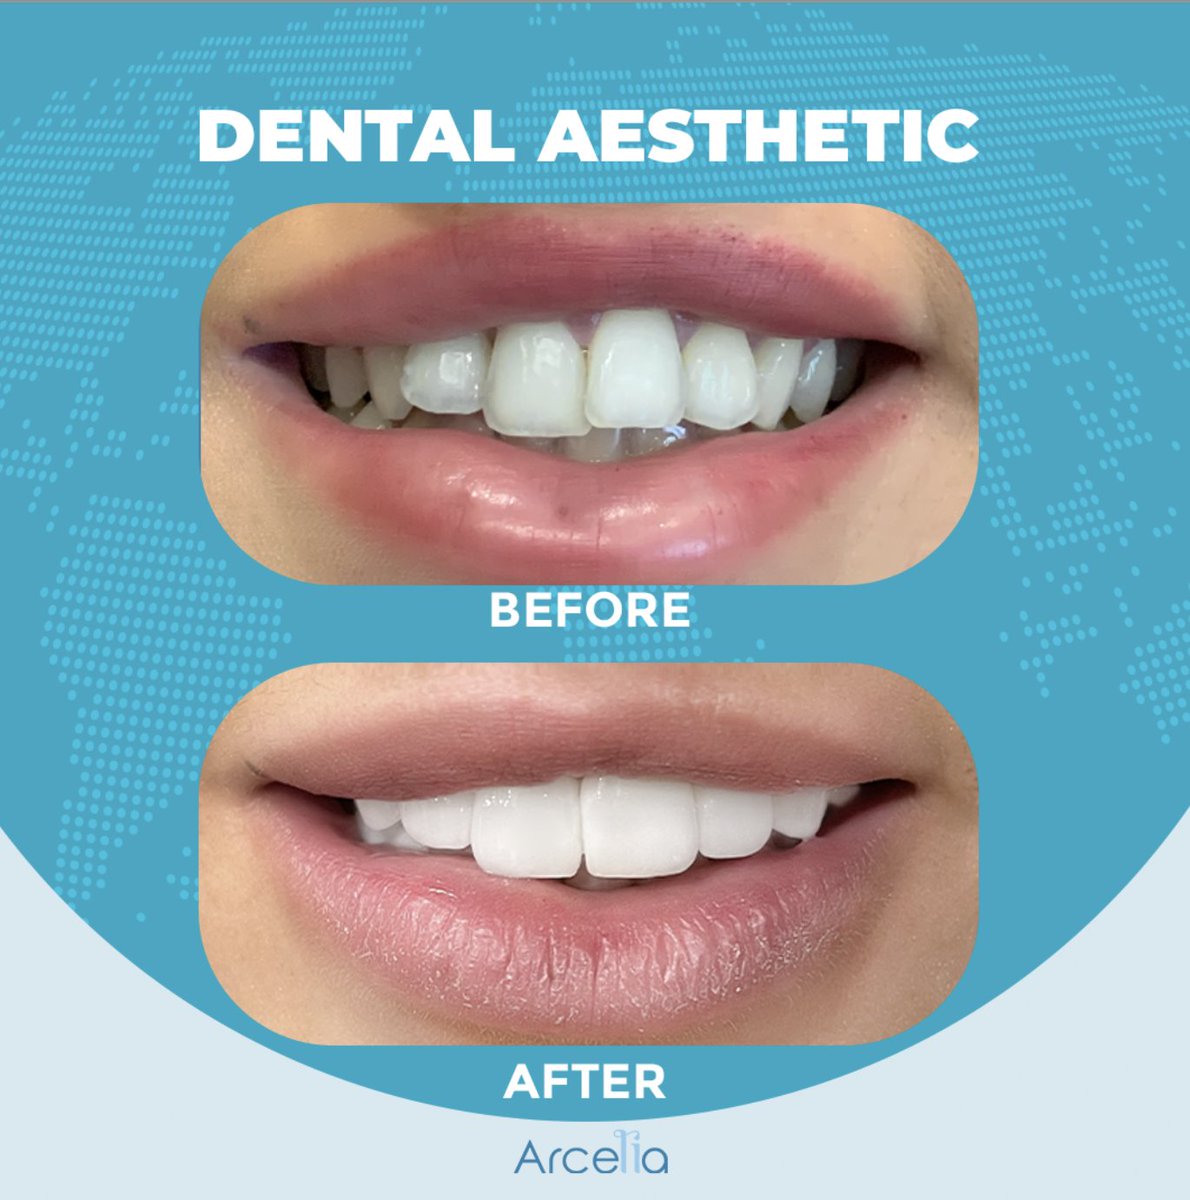 A smile that you deserve😊

#dentalaesthetic #plasticsurgery #dentalcare